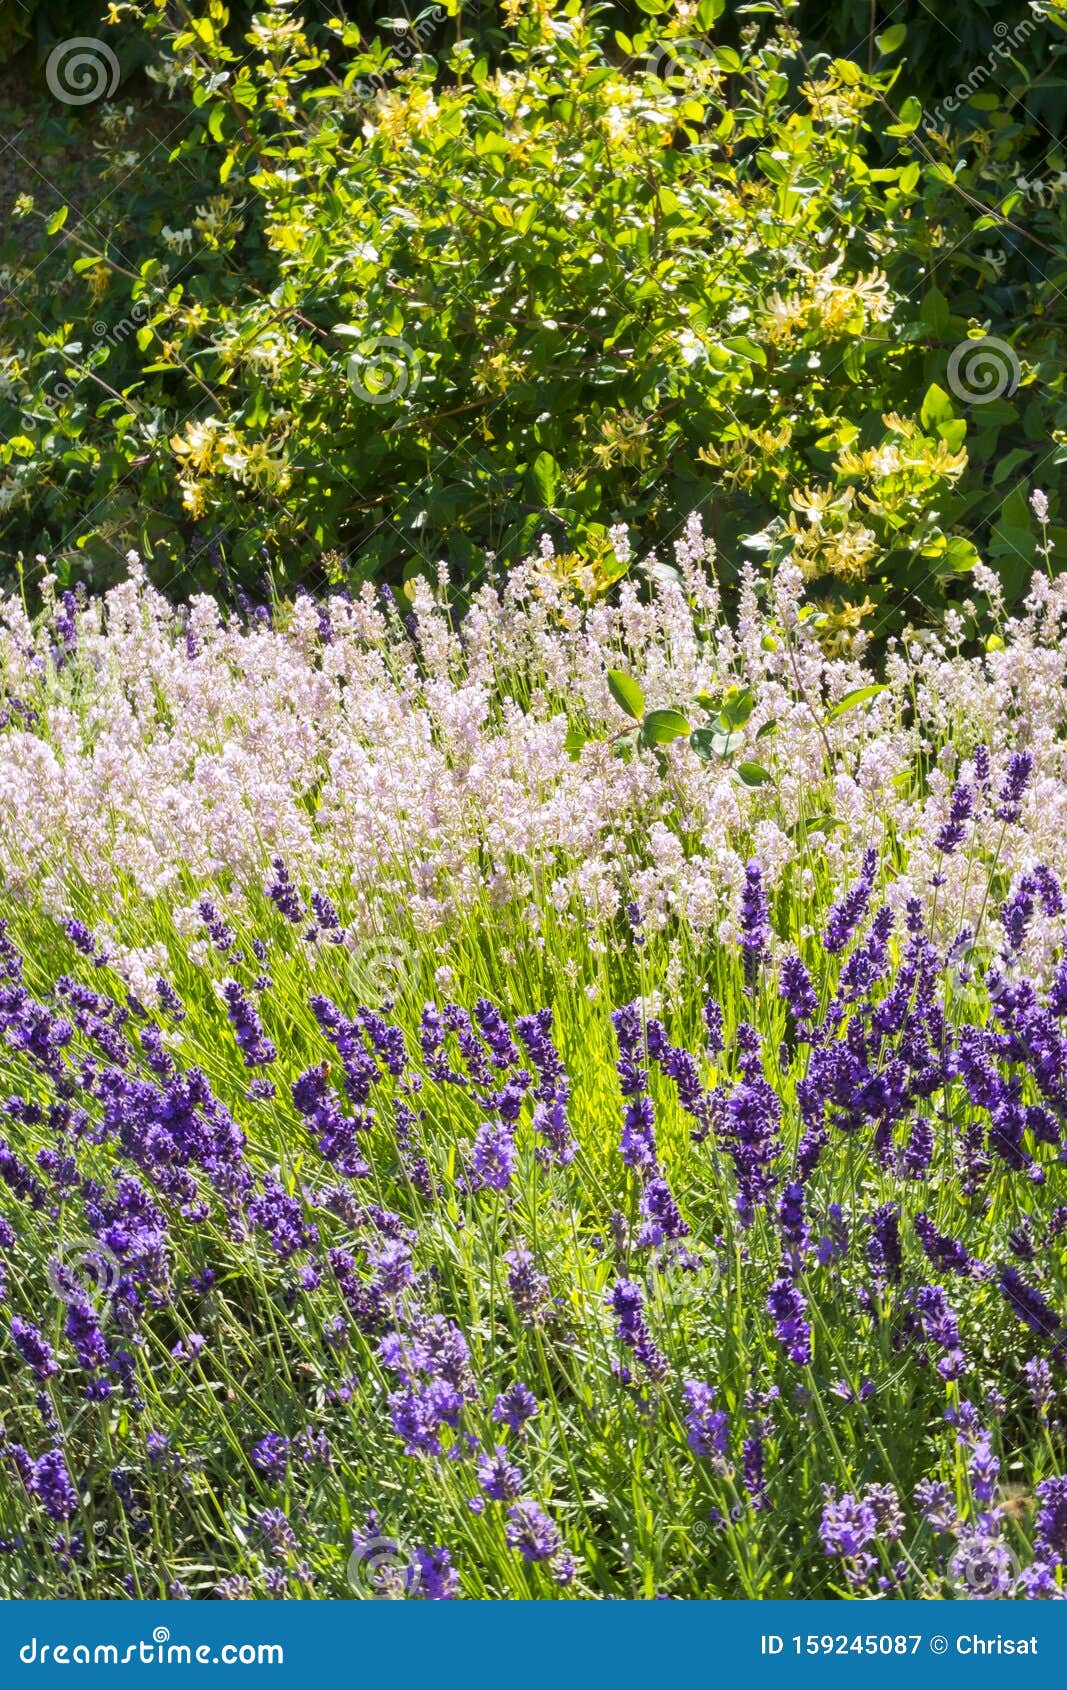 Summer Lavender Garden Border Stock Image Image of colourful